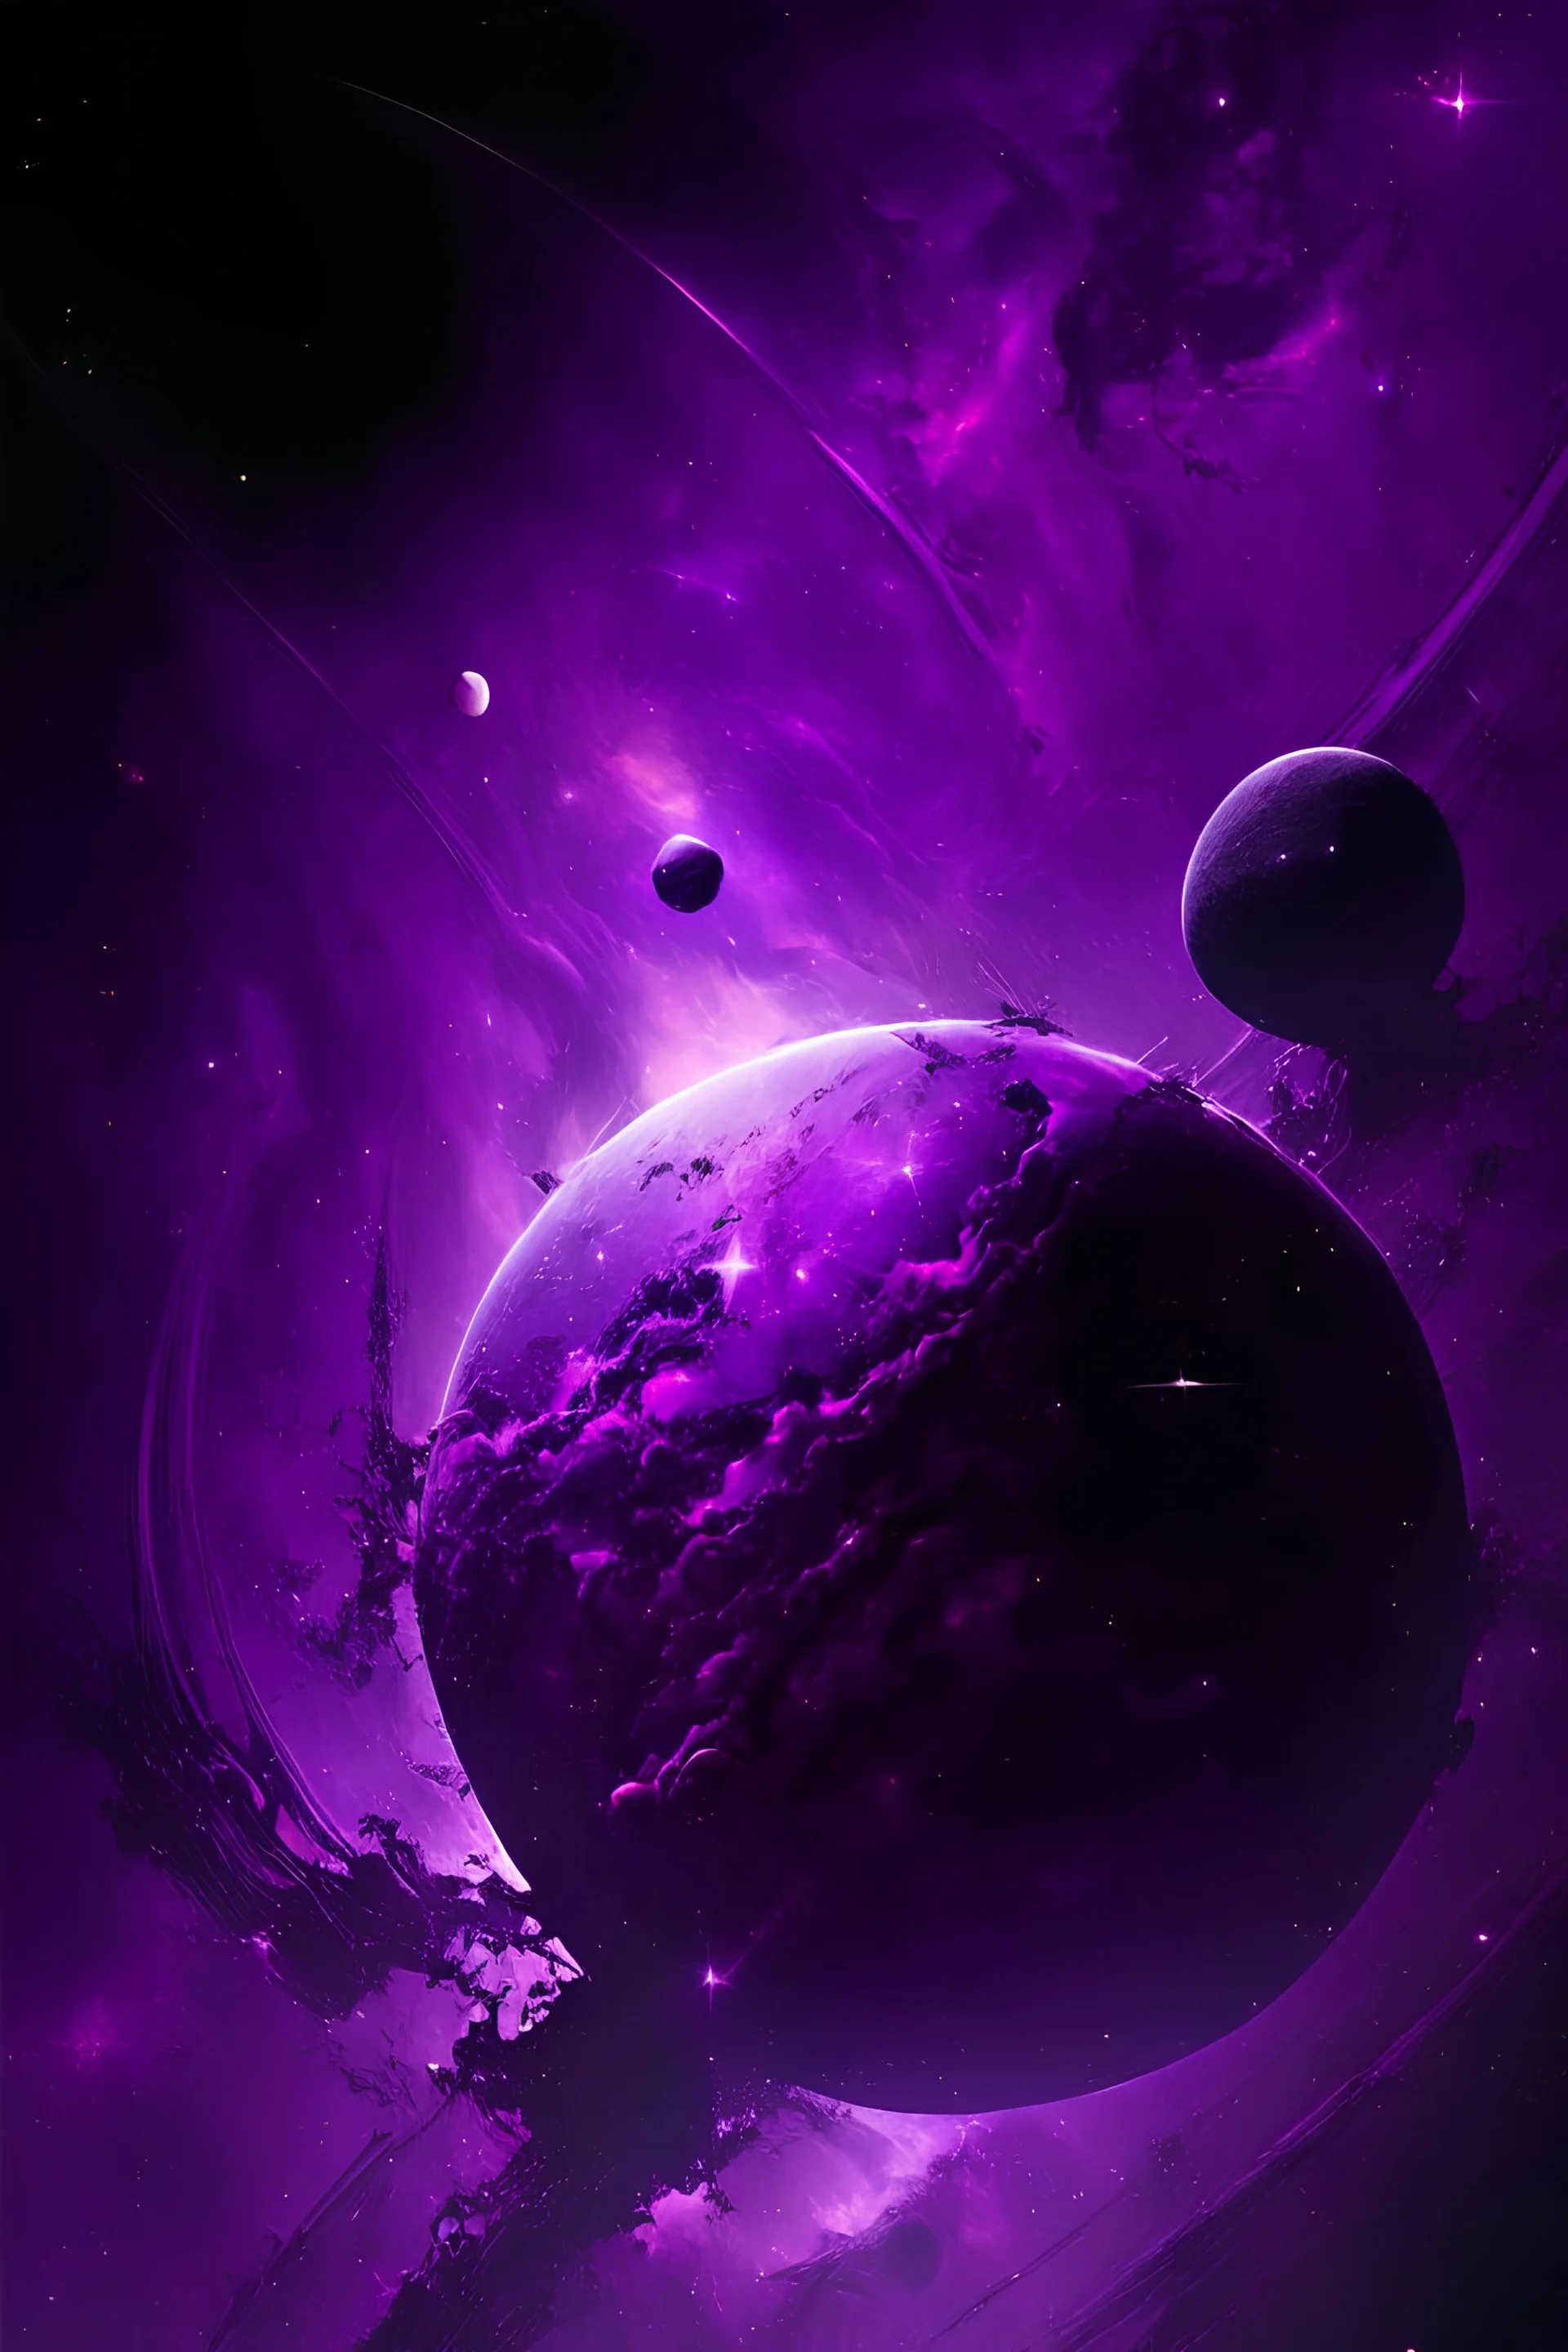 Space purple